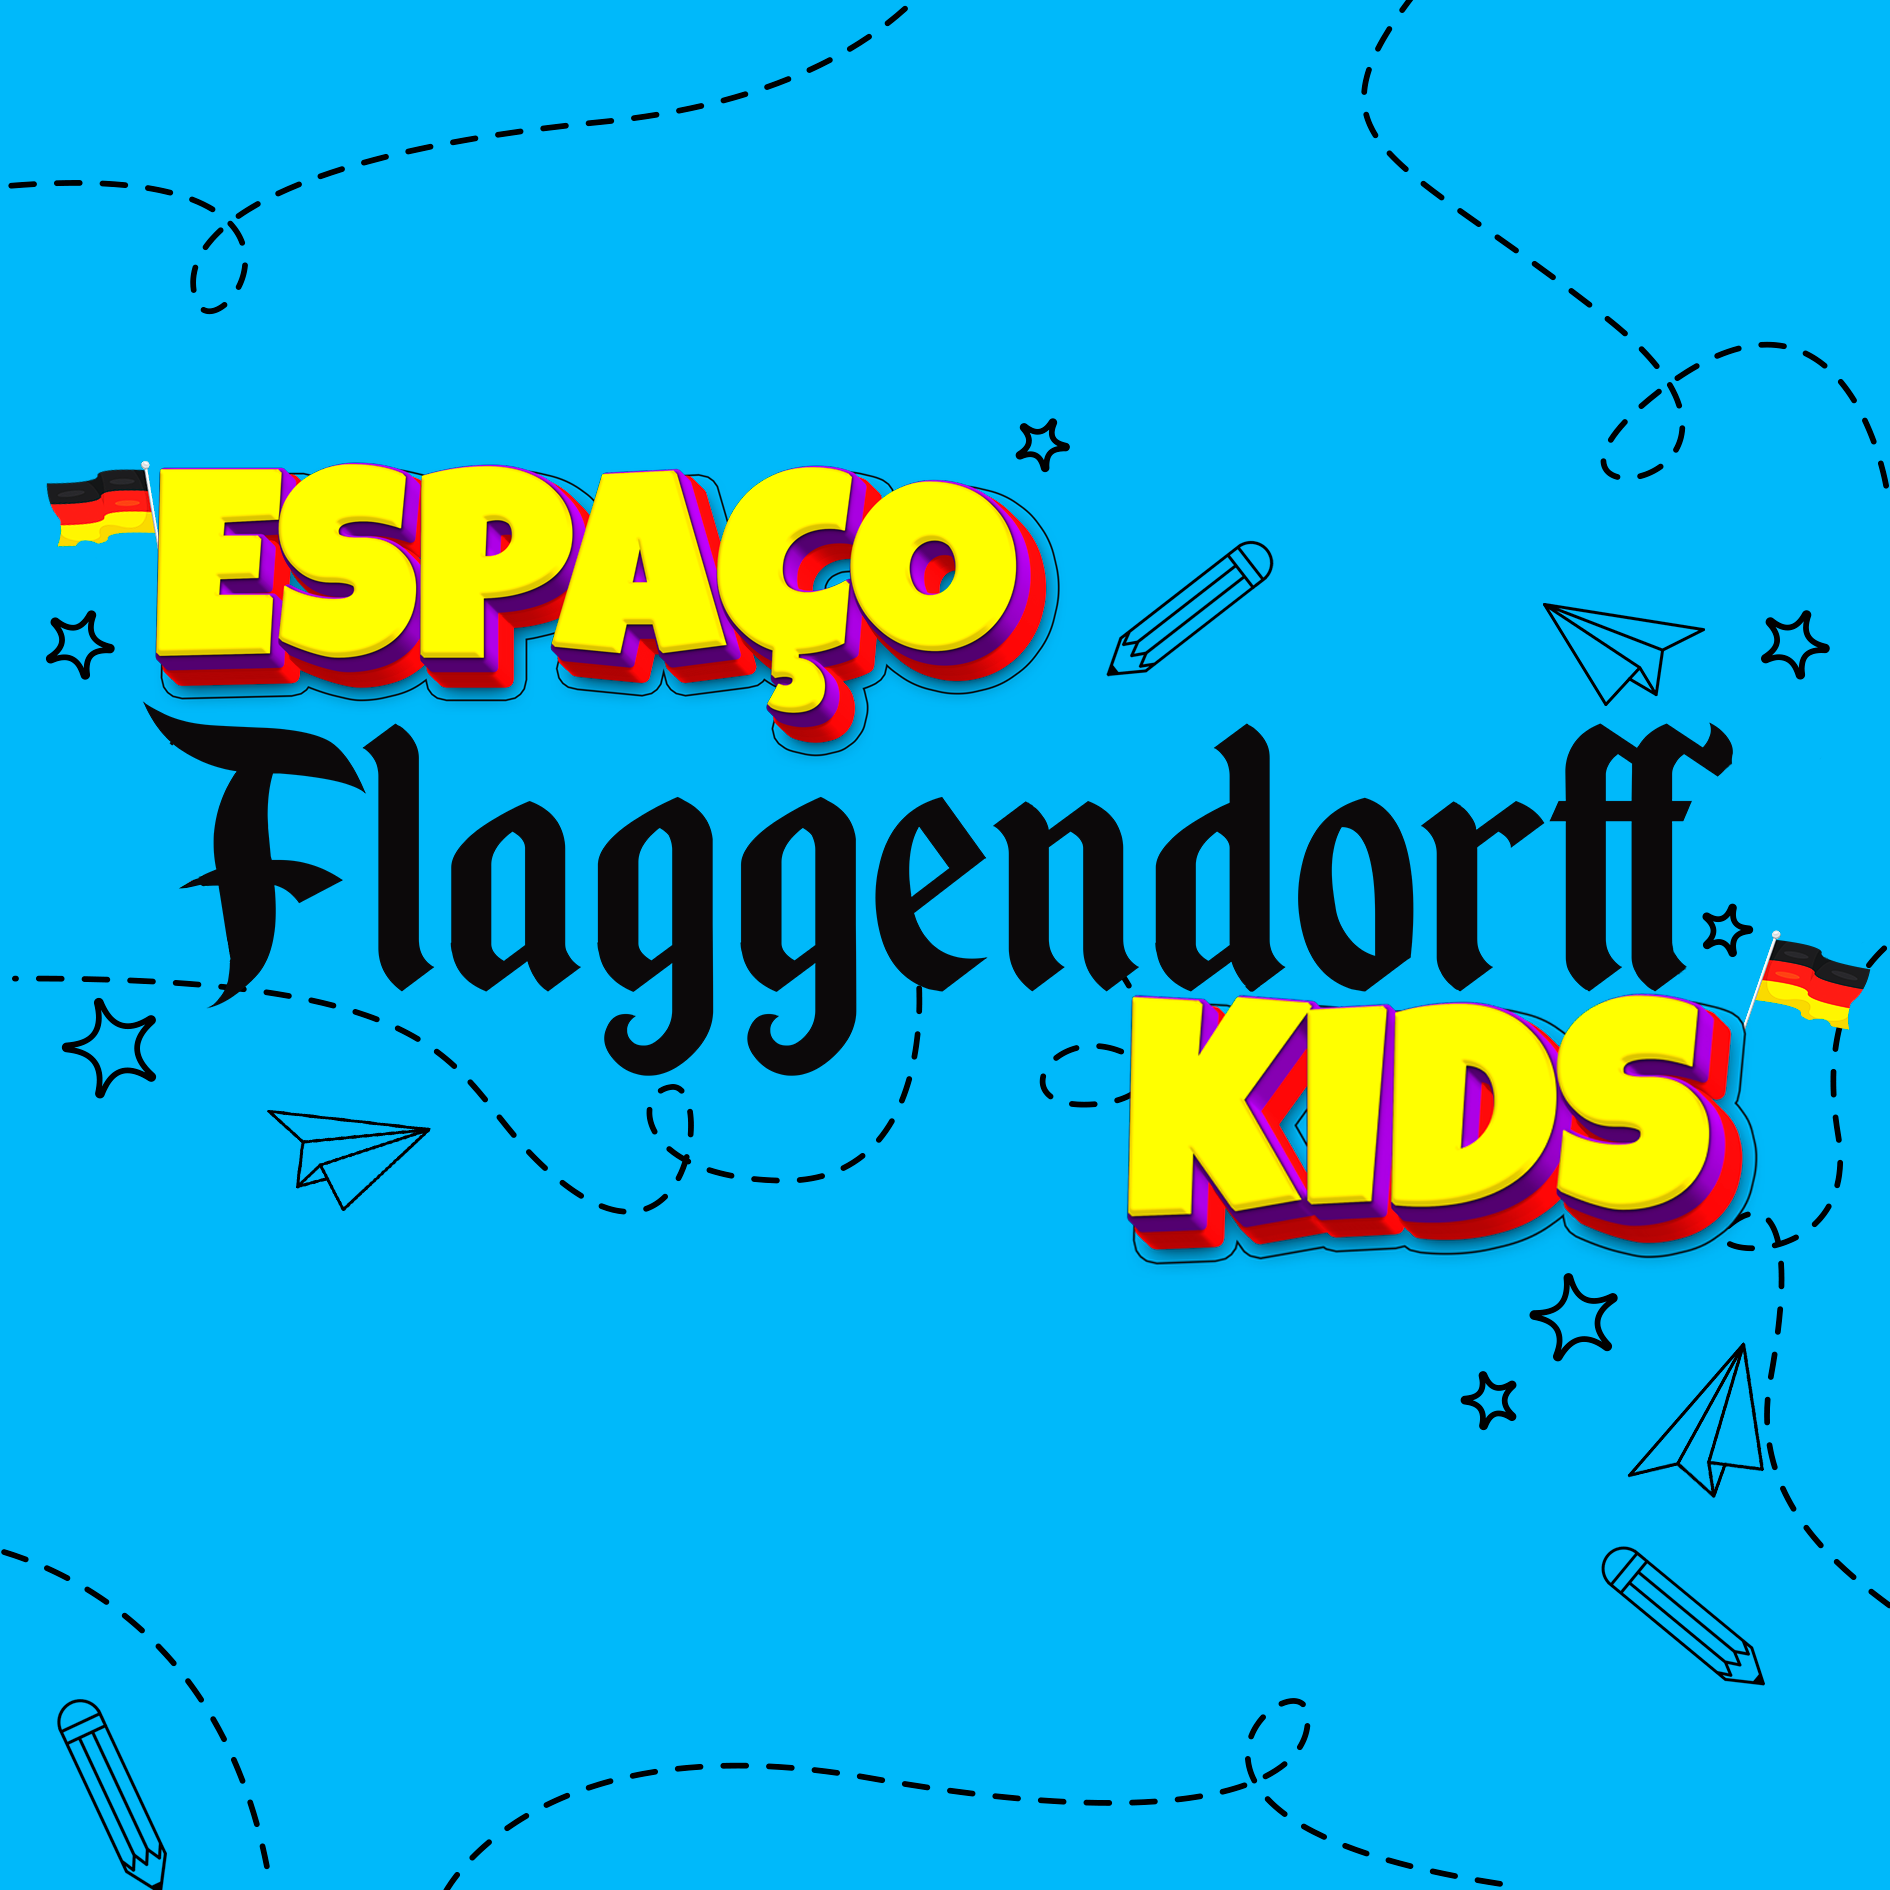 Flaggendorff kids